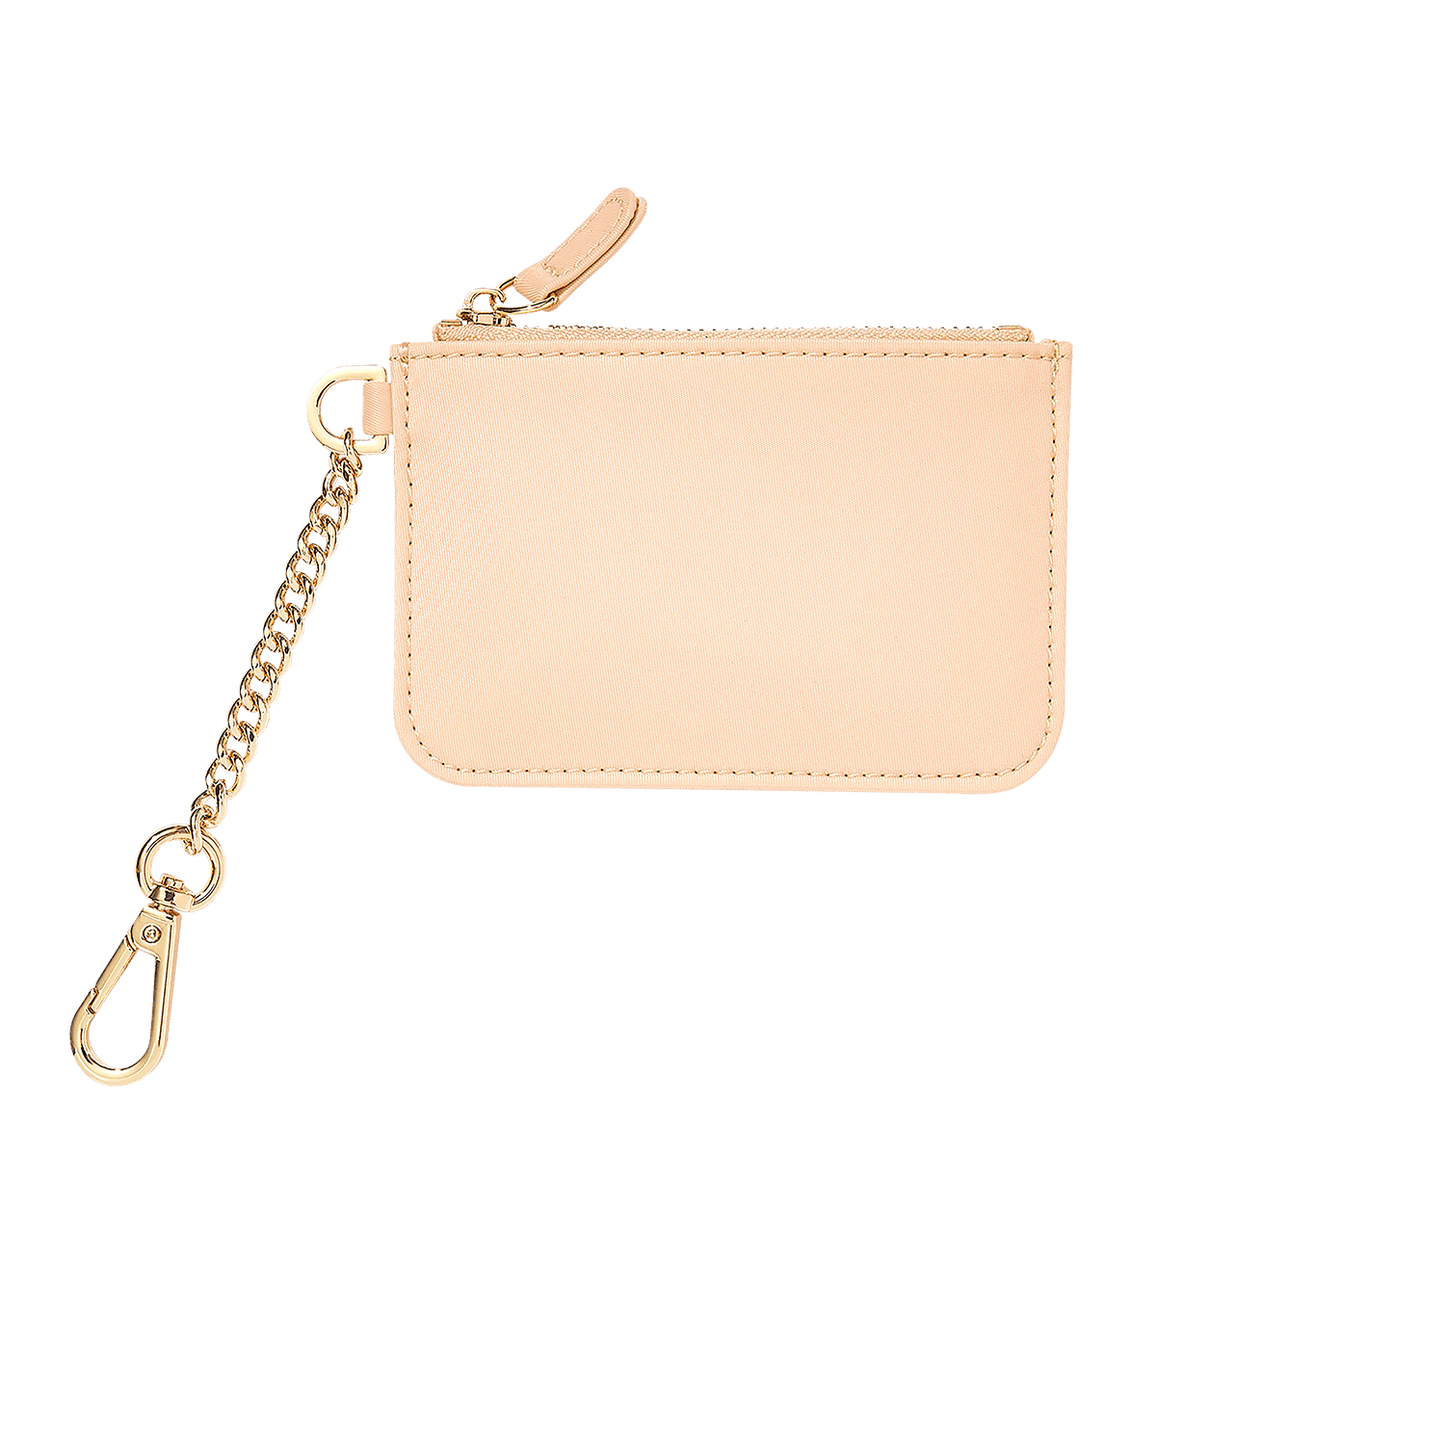 Keychain wallet, wallets for women small